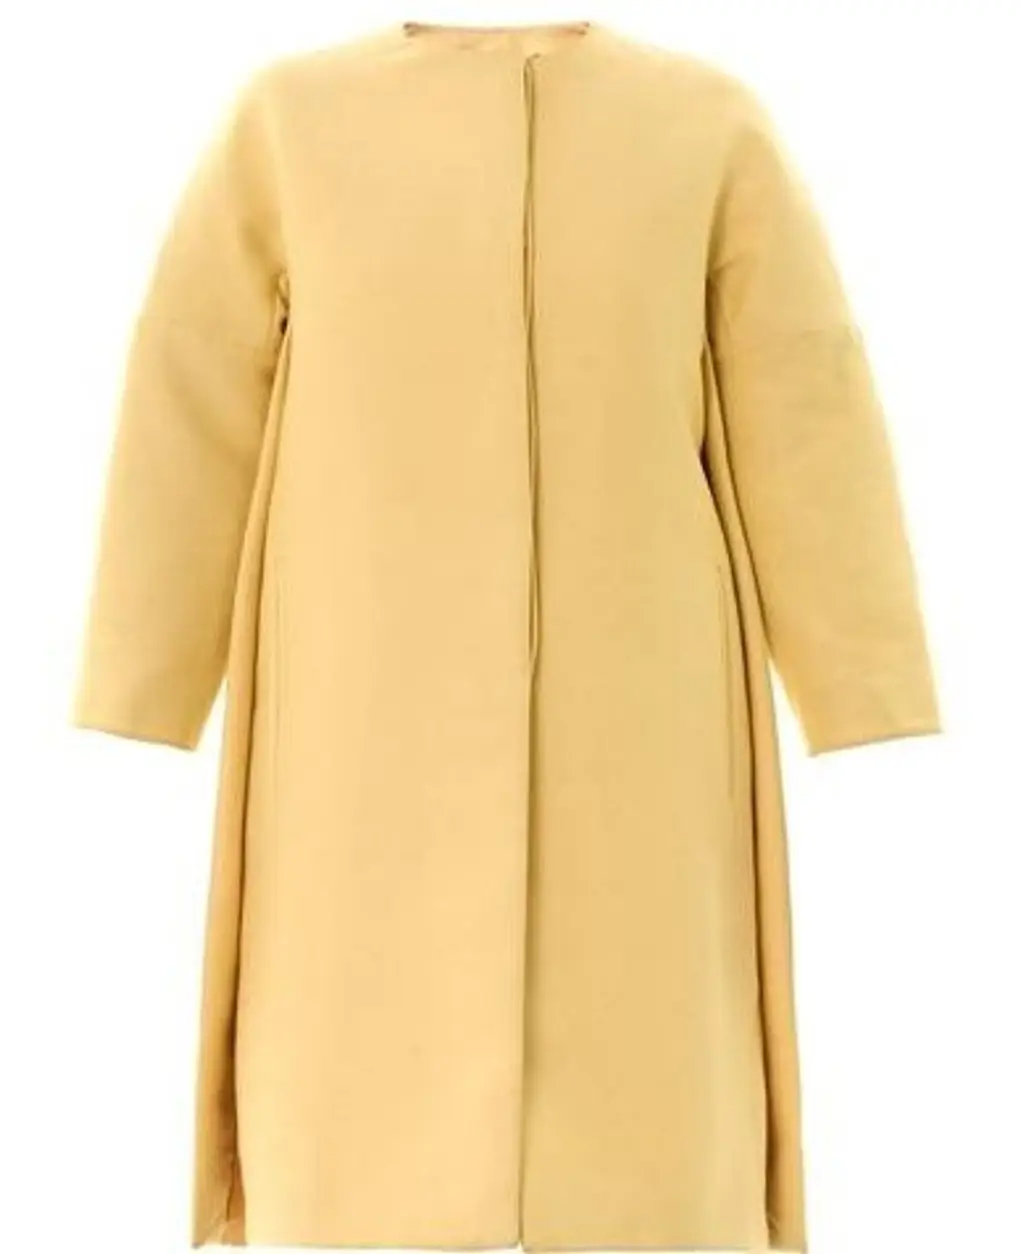 Lemon Yellow Coat